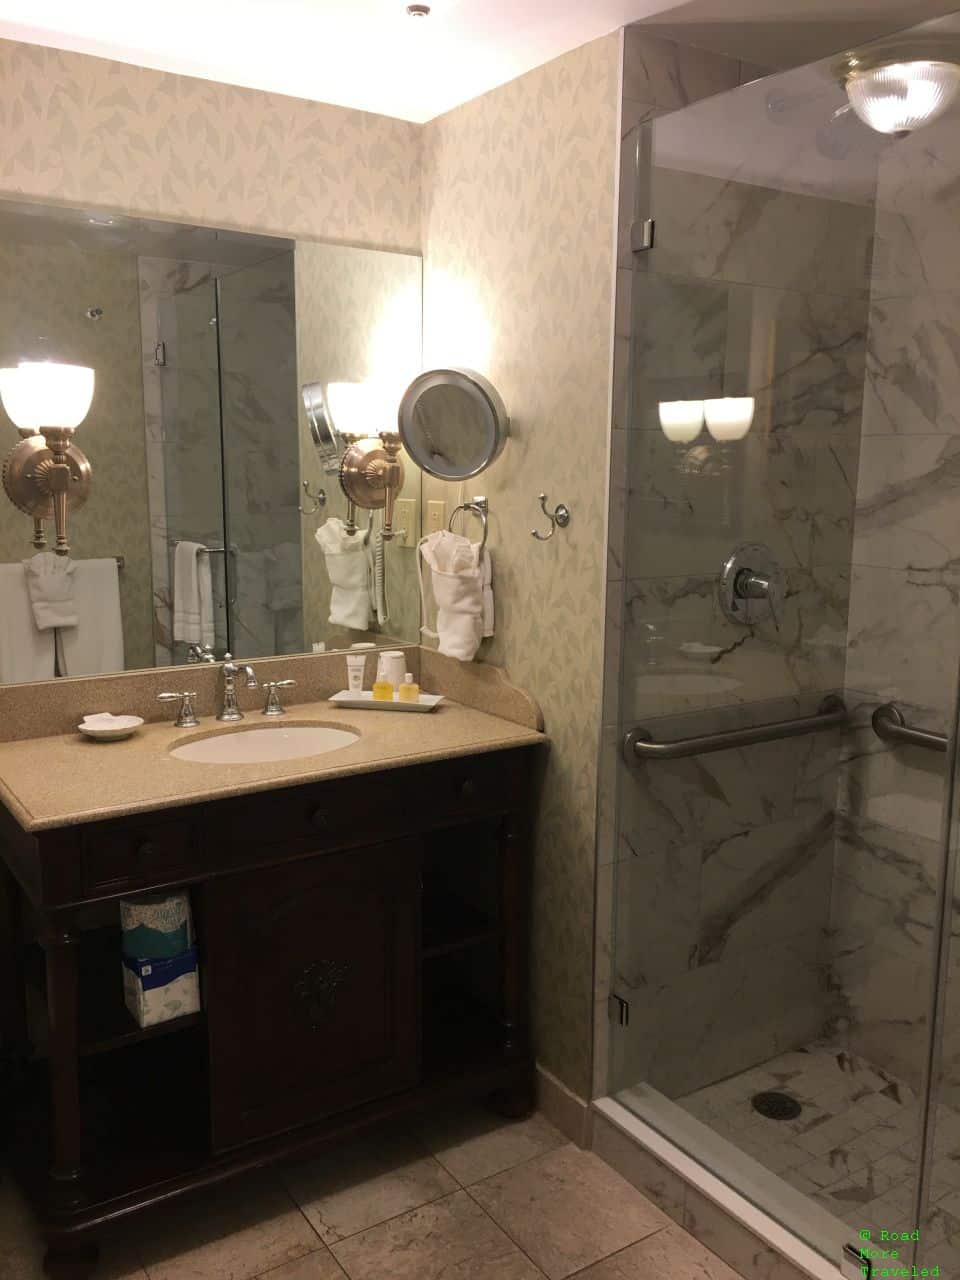 The Brown Hotel Louisville Luxury Suite - first bathroom in bedroom